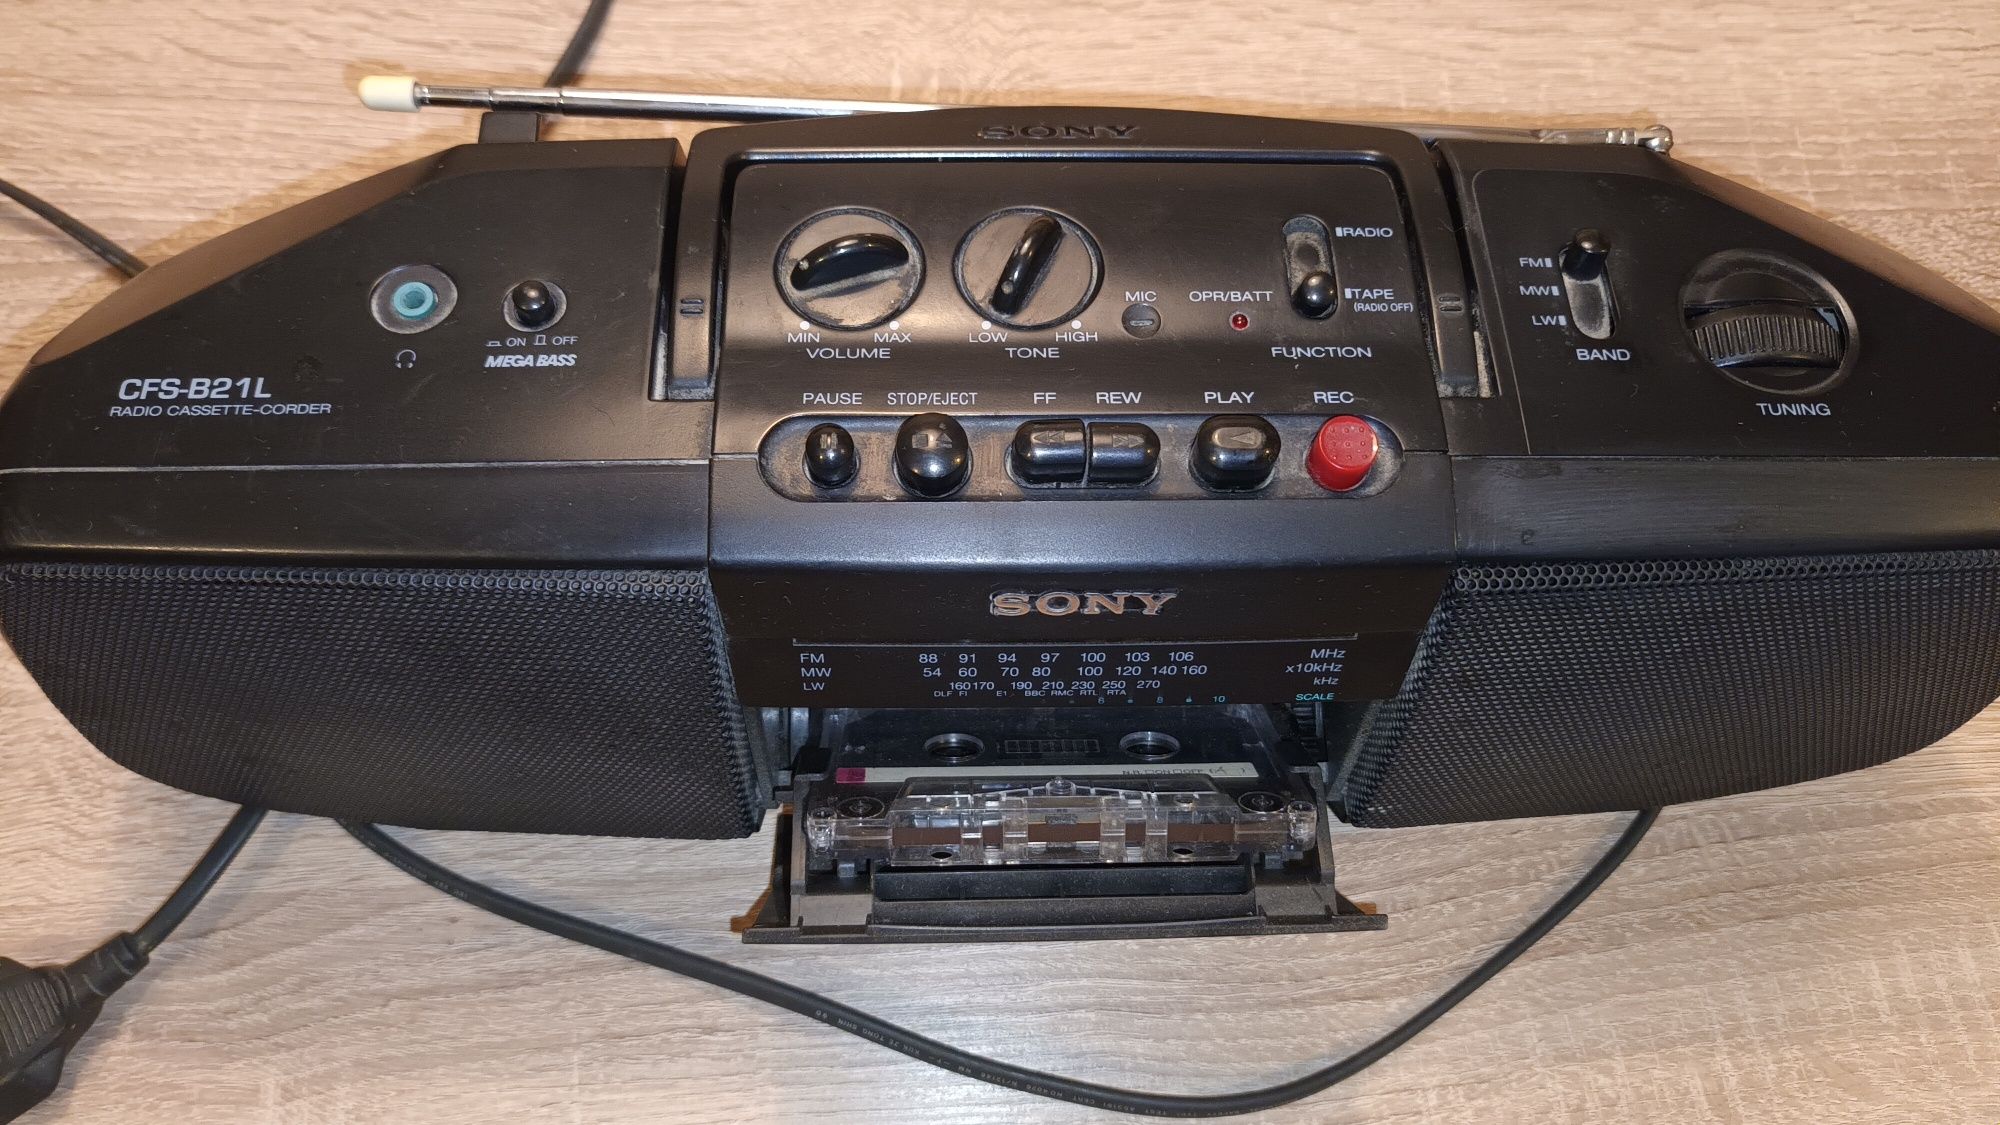 Radiomagnetofon Sony CFS-B21L